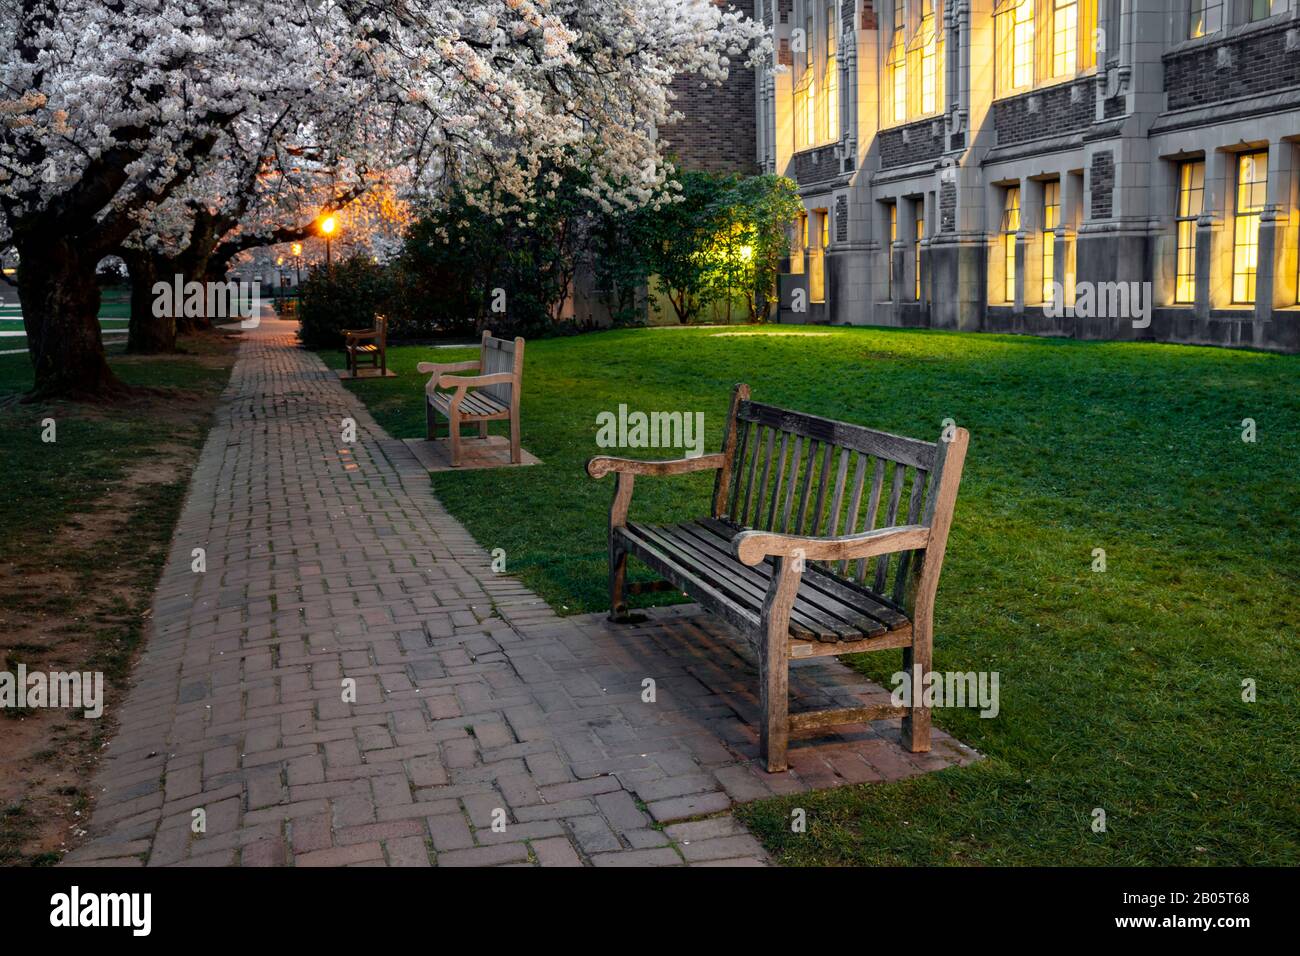 WA17181-00...WASHINGTON - Cherry trees in bloom near the Smith Building at the University Of Washington in Seattle. Stock Photo